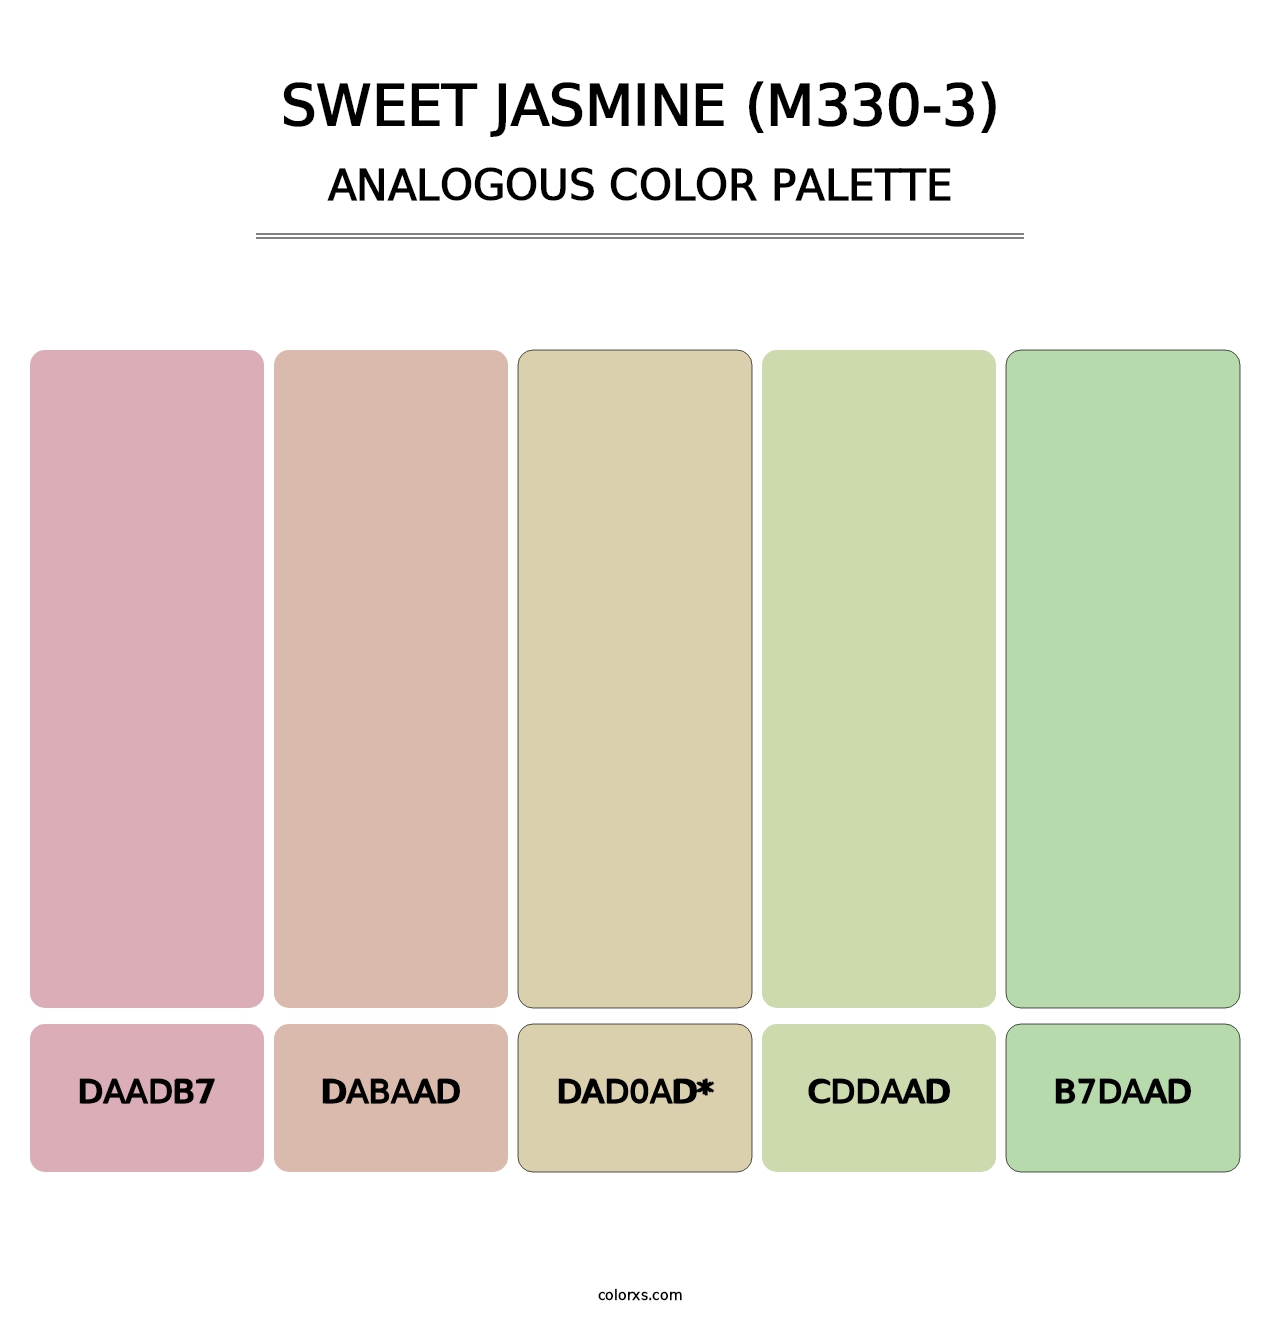 Sweet Jasmine (M330-3) - Analogous Color Palette